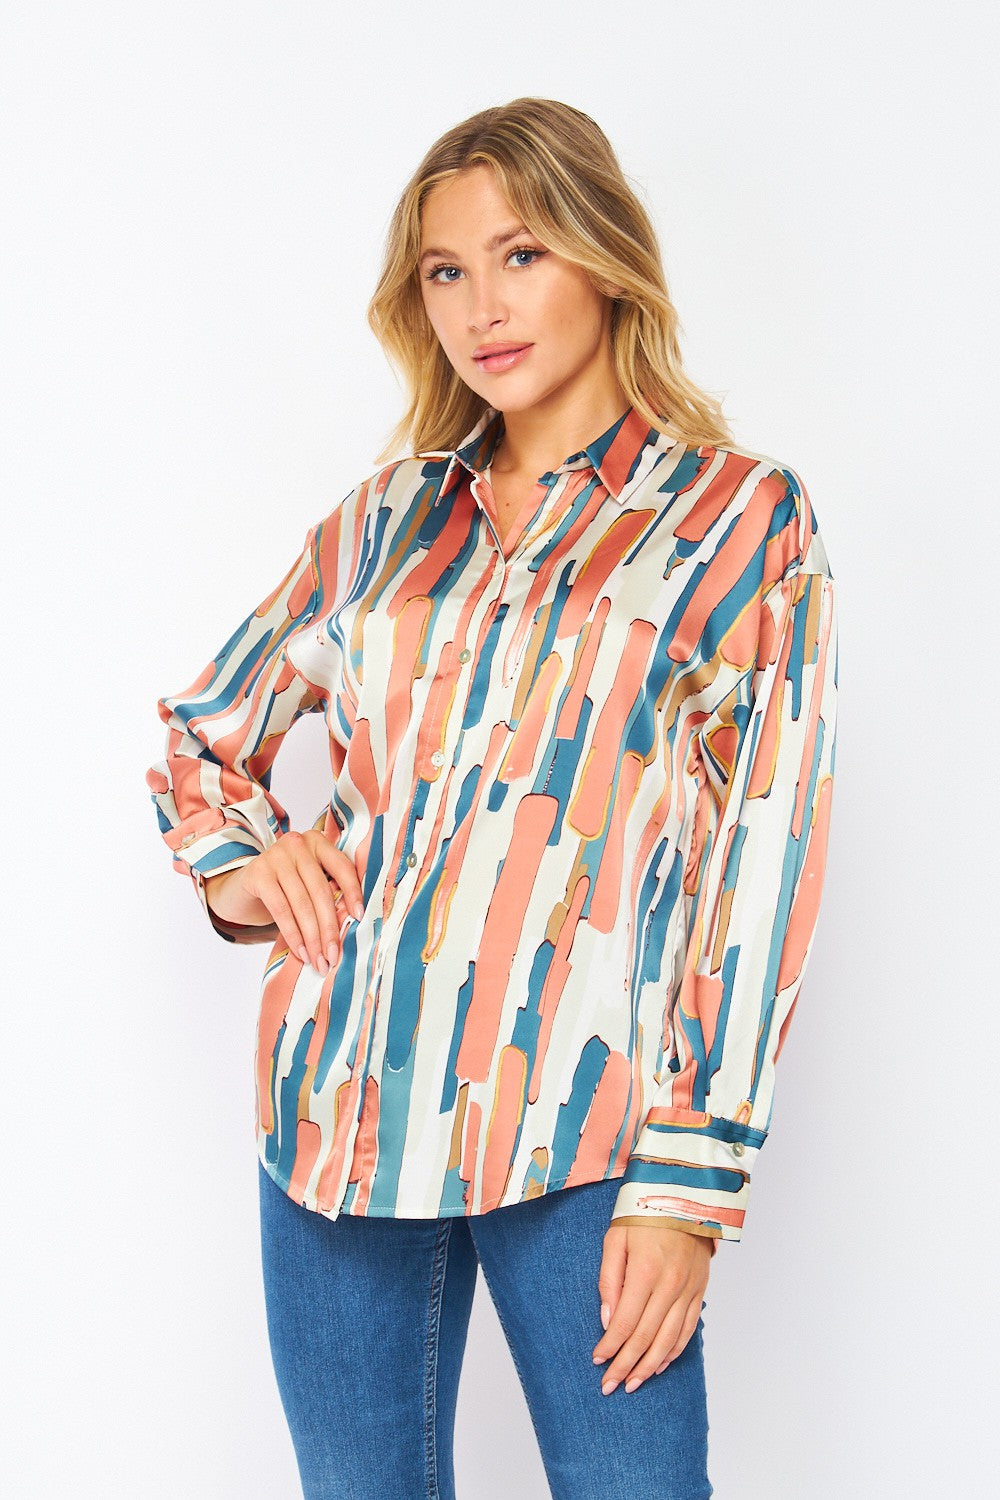 Coral satin blouse